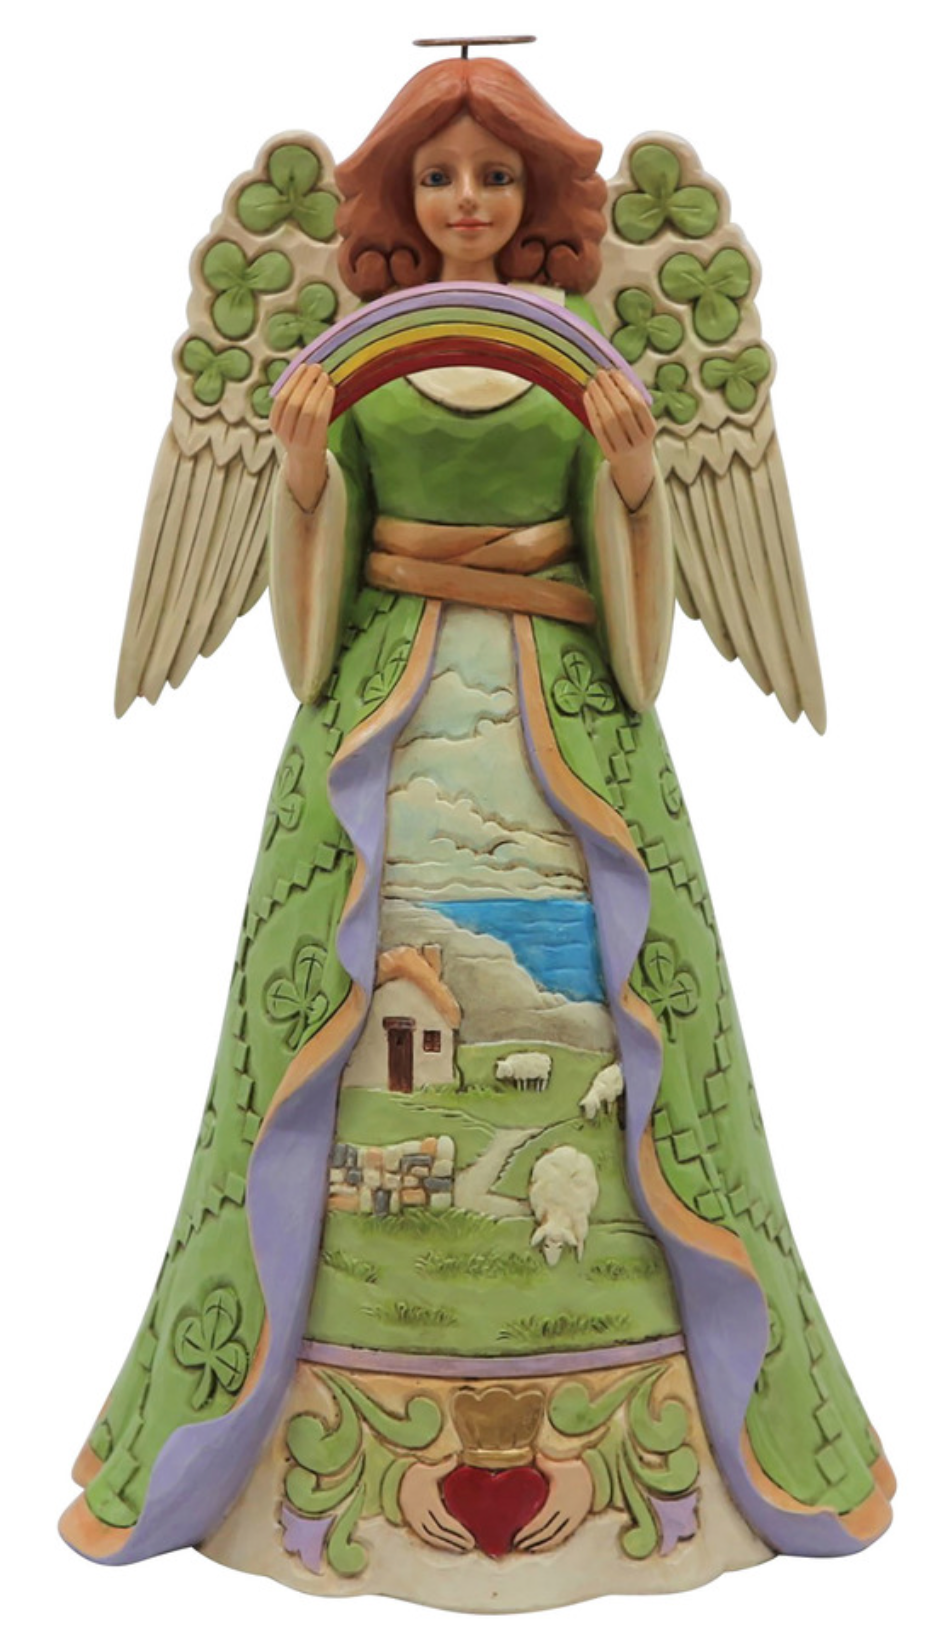 Irish Angel with Shamrock Wing Figurine from Jim Shore Heartwood Creek